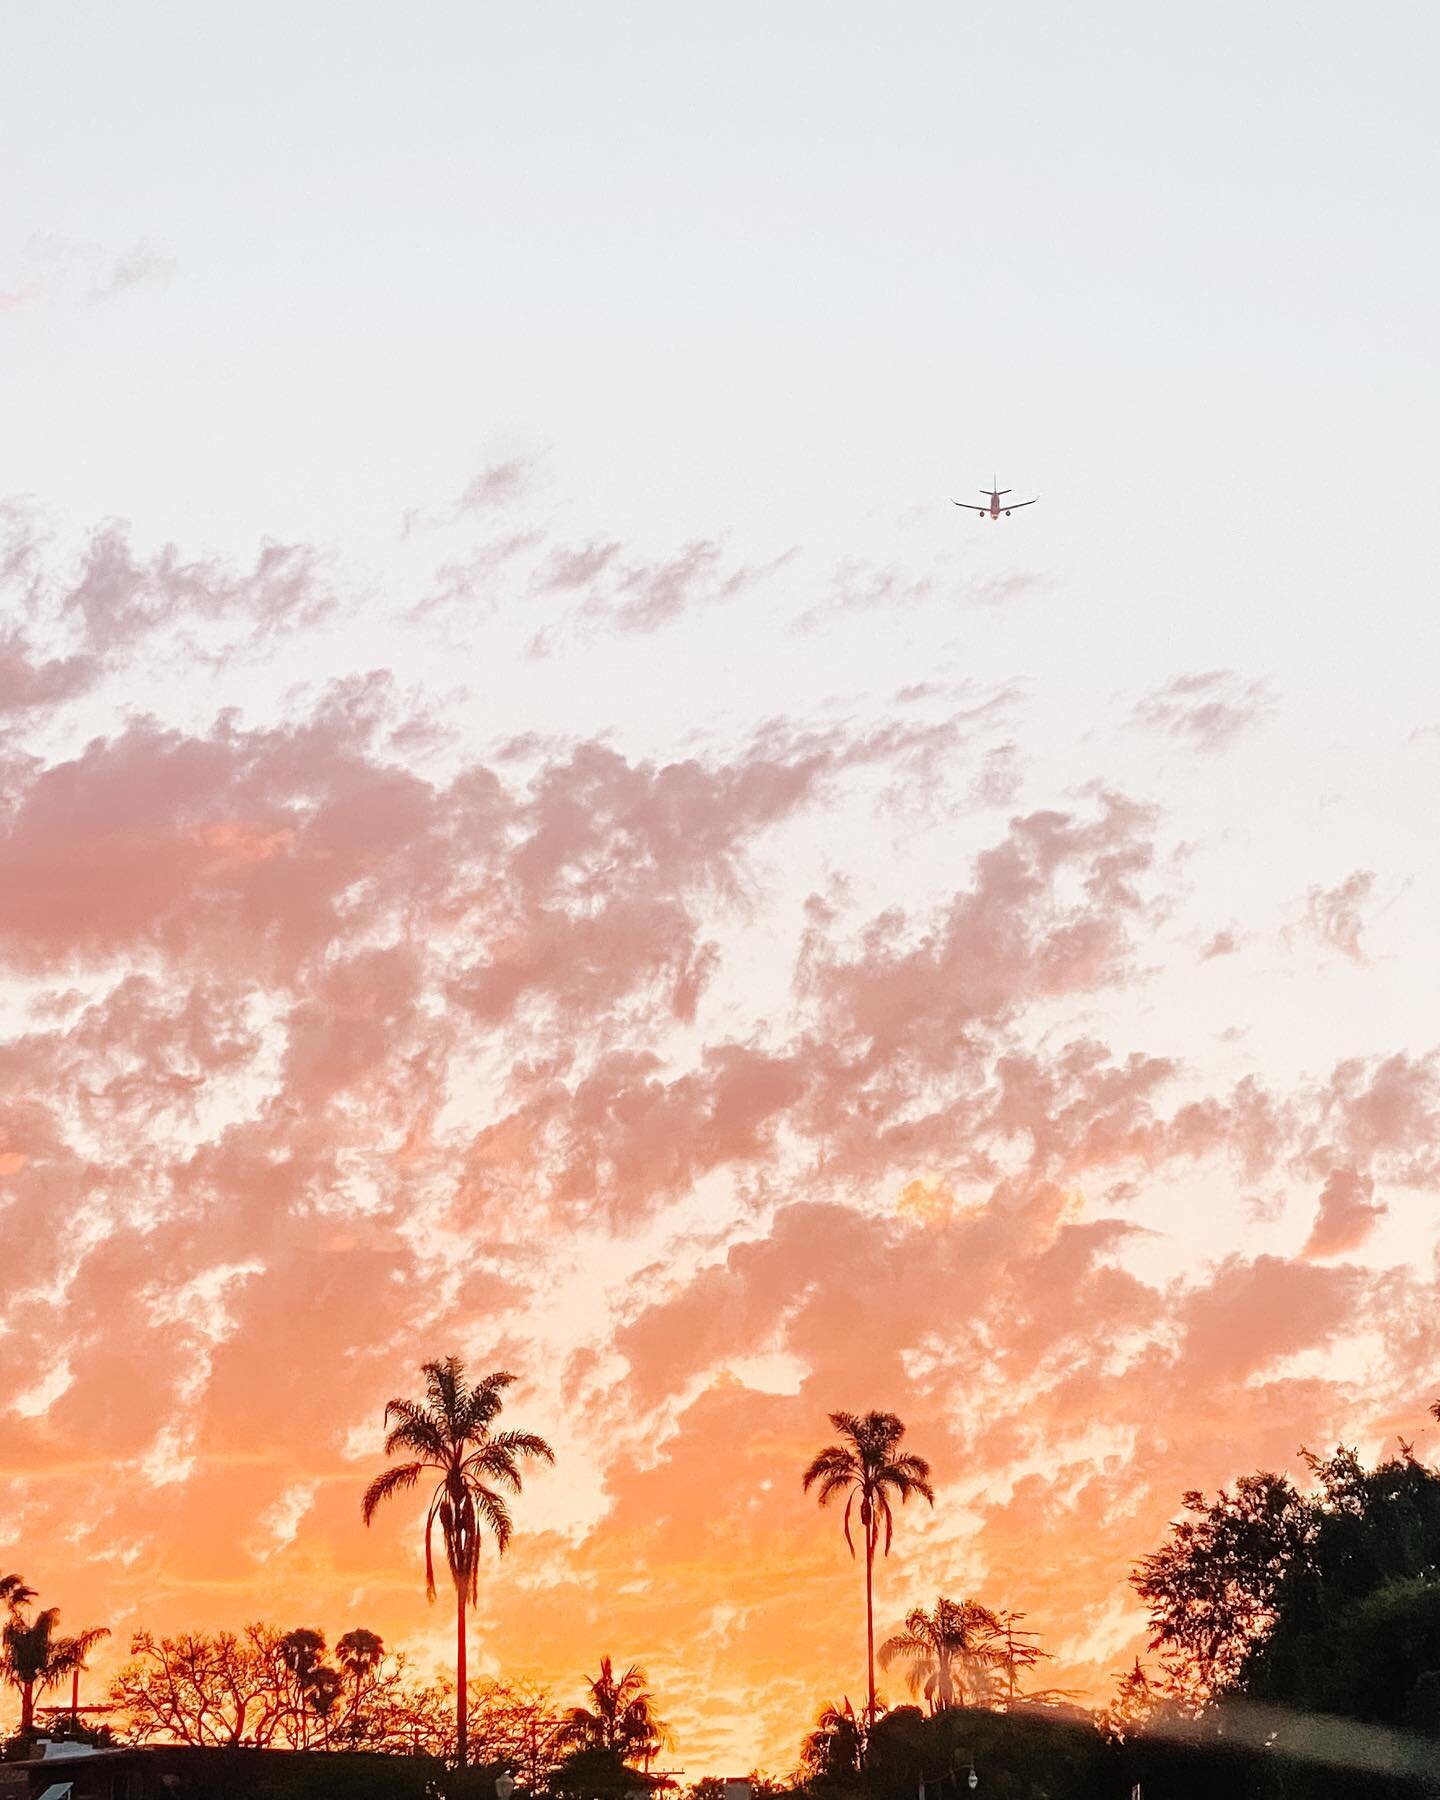 off into the sunset ✈️ 🌅 
.
.
.
#sandiego #travel #travelgram #travelphotography #california #wedtcoast #seychelles #sunset